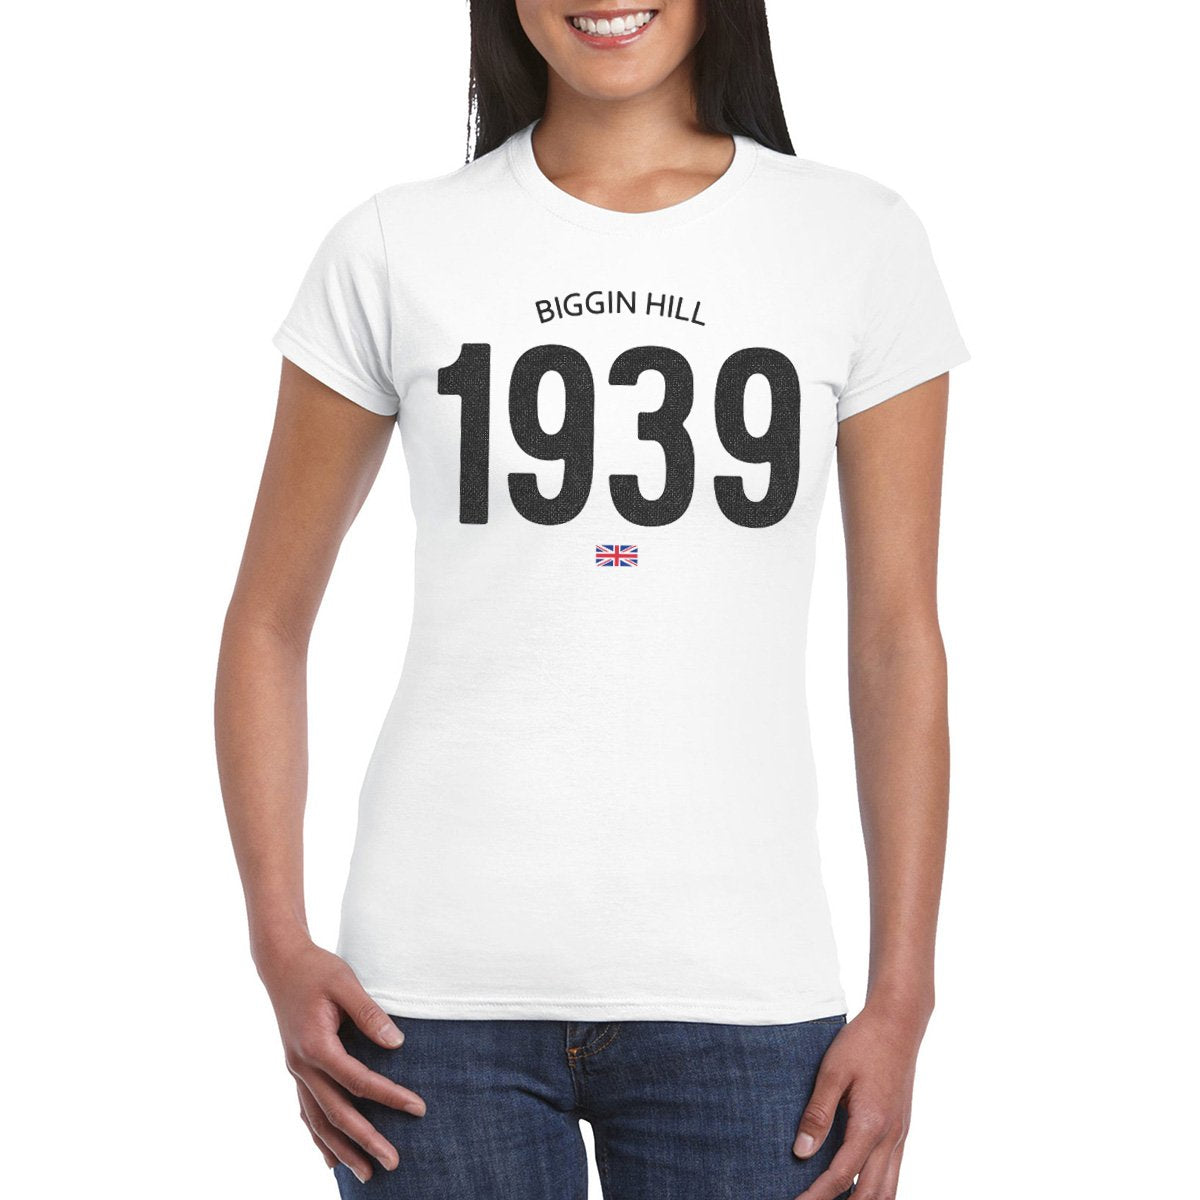 Biggin Hill Heritage Women's T-Shirt